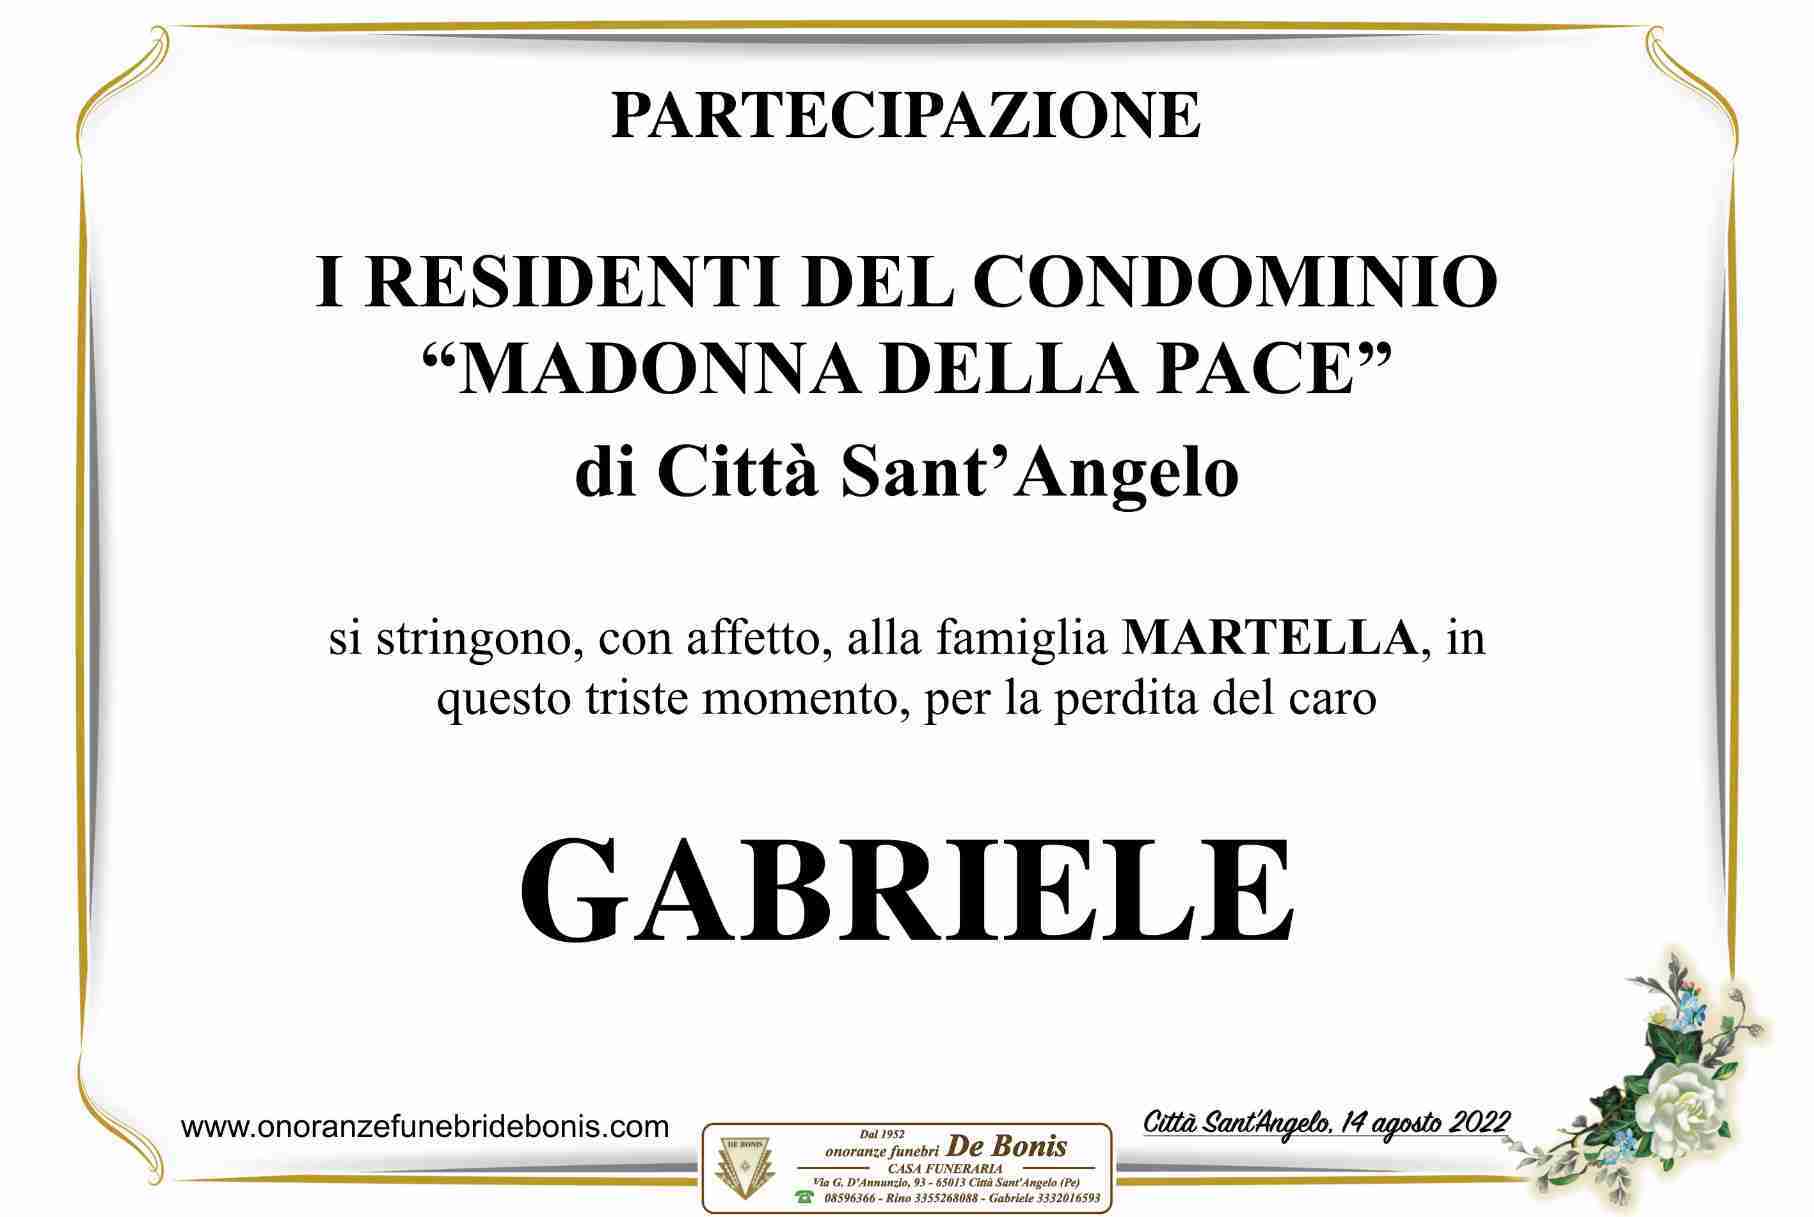 Gabriele Martella